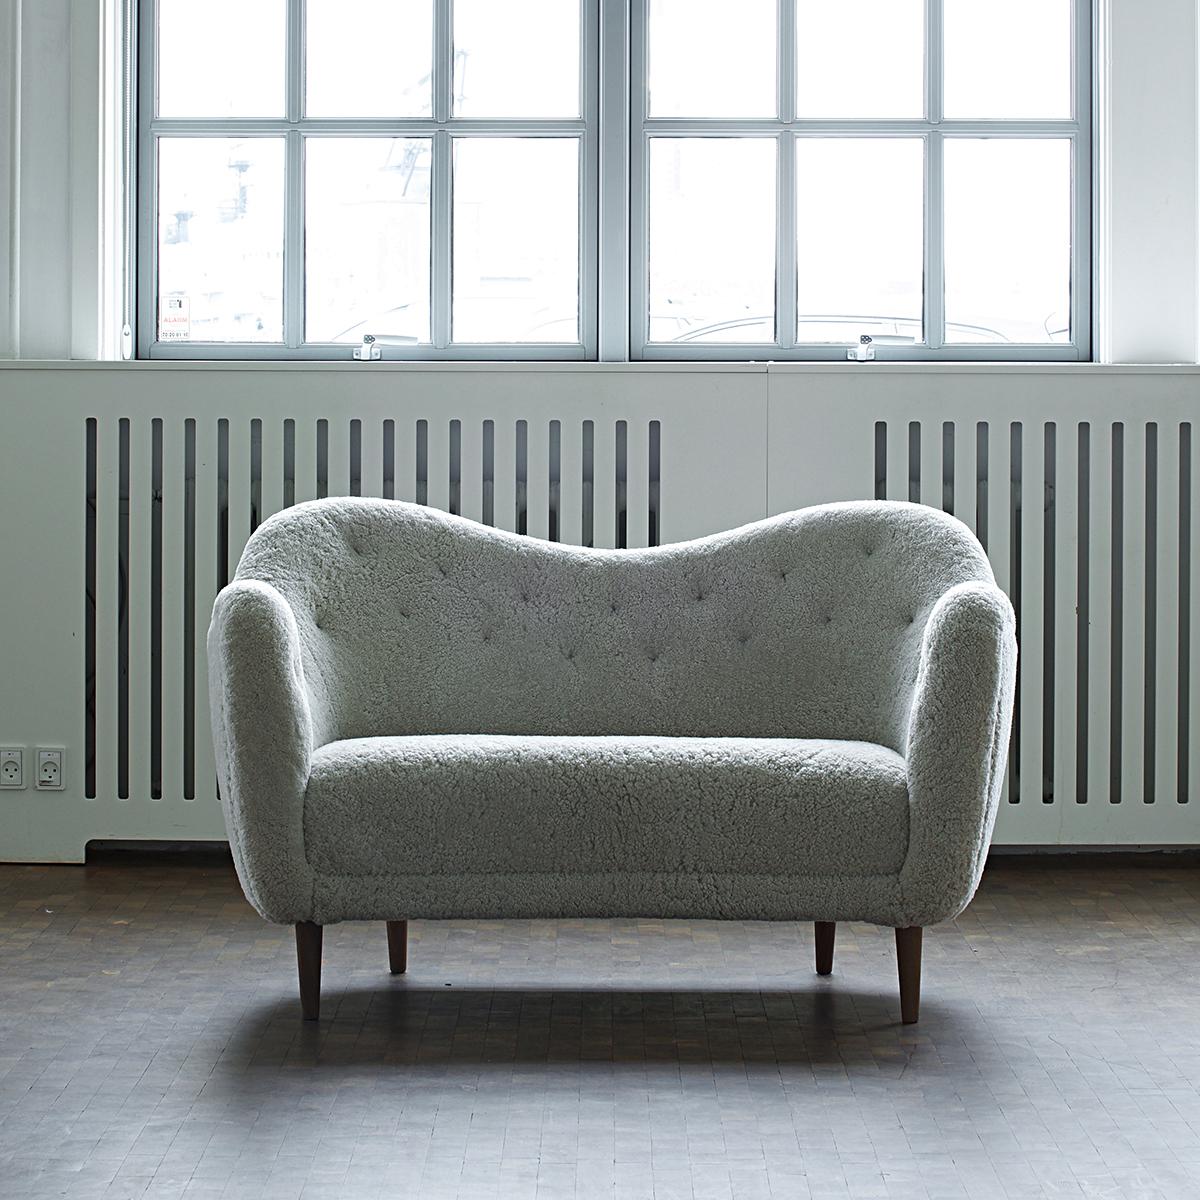 Finn Juhl 46 Sofa Couch Wood and Sheepskin 1